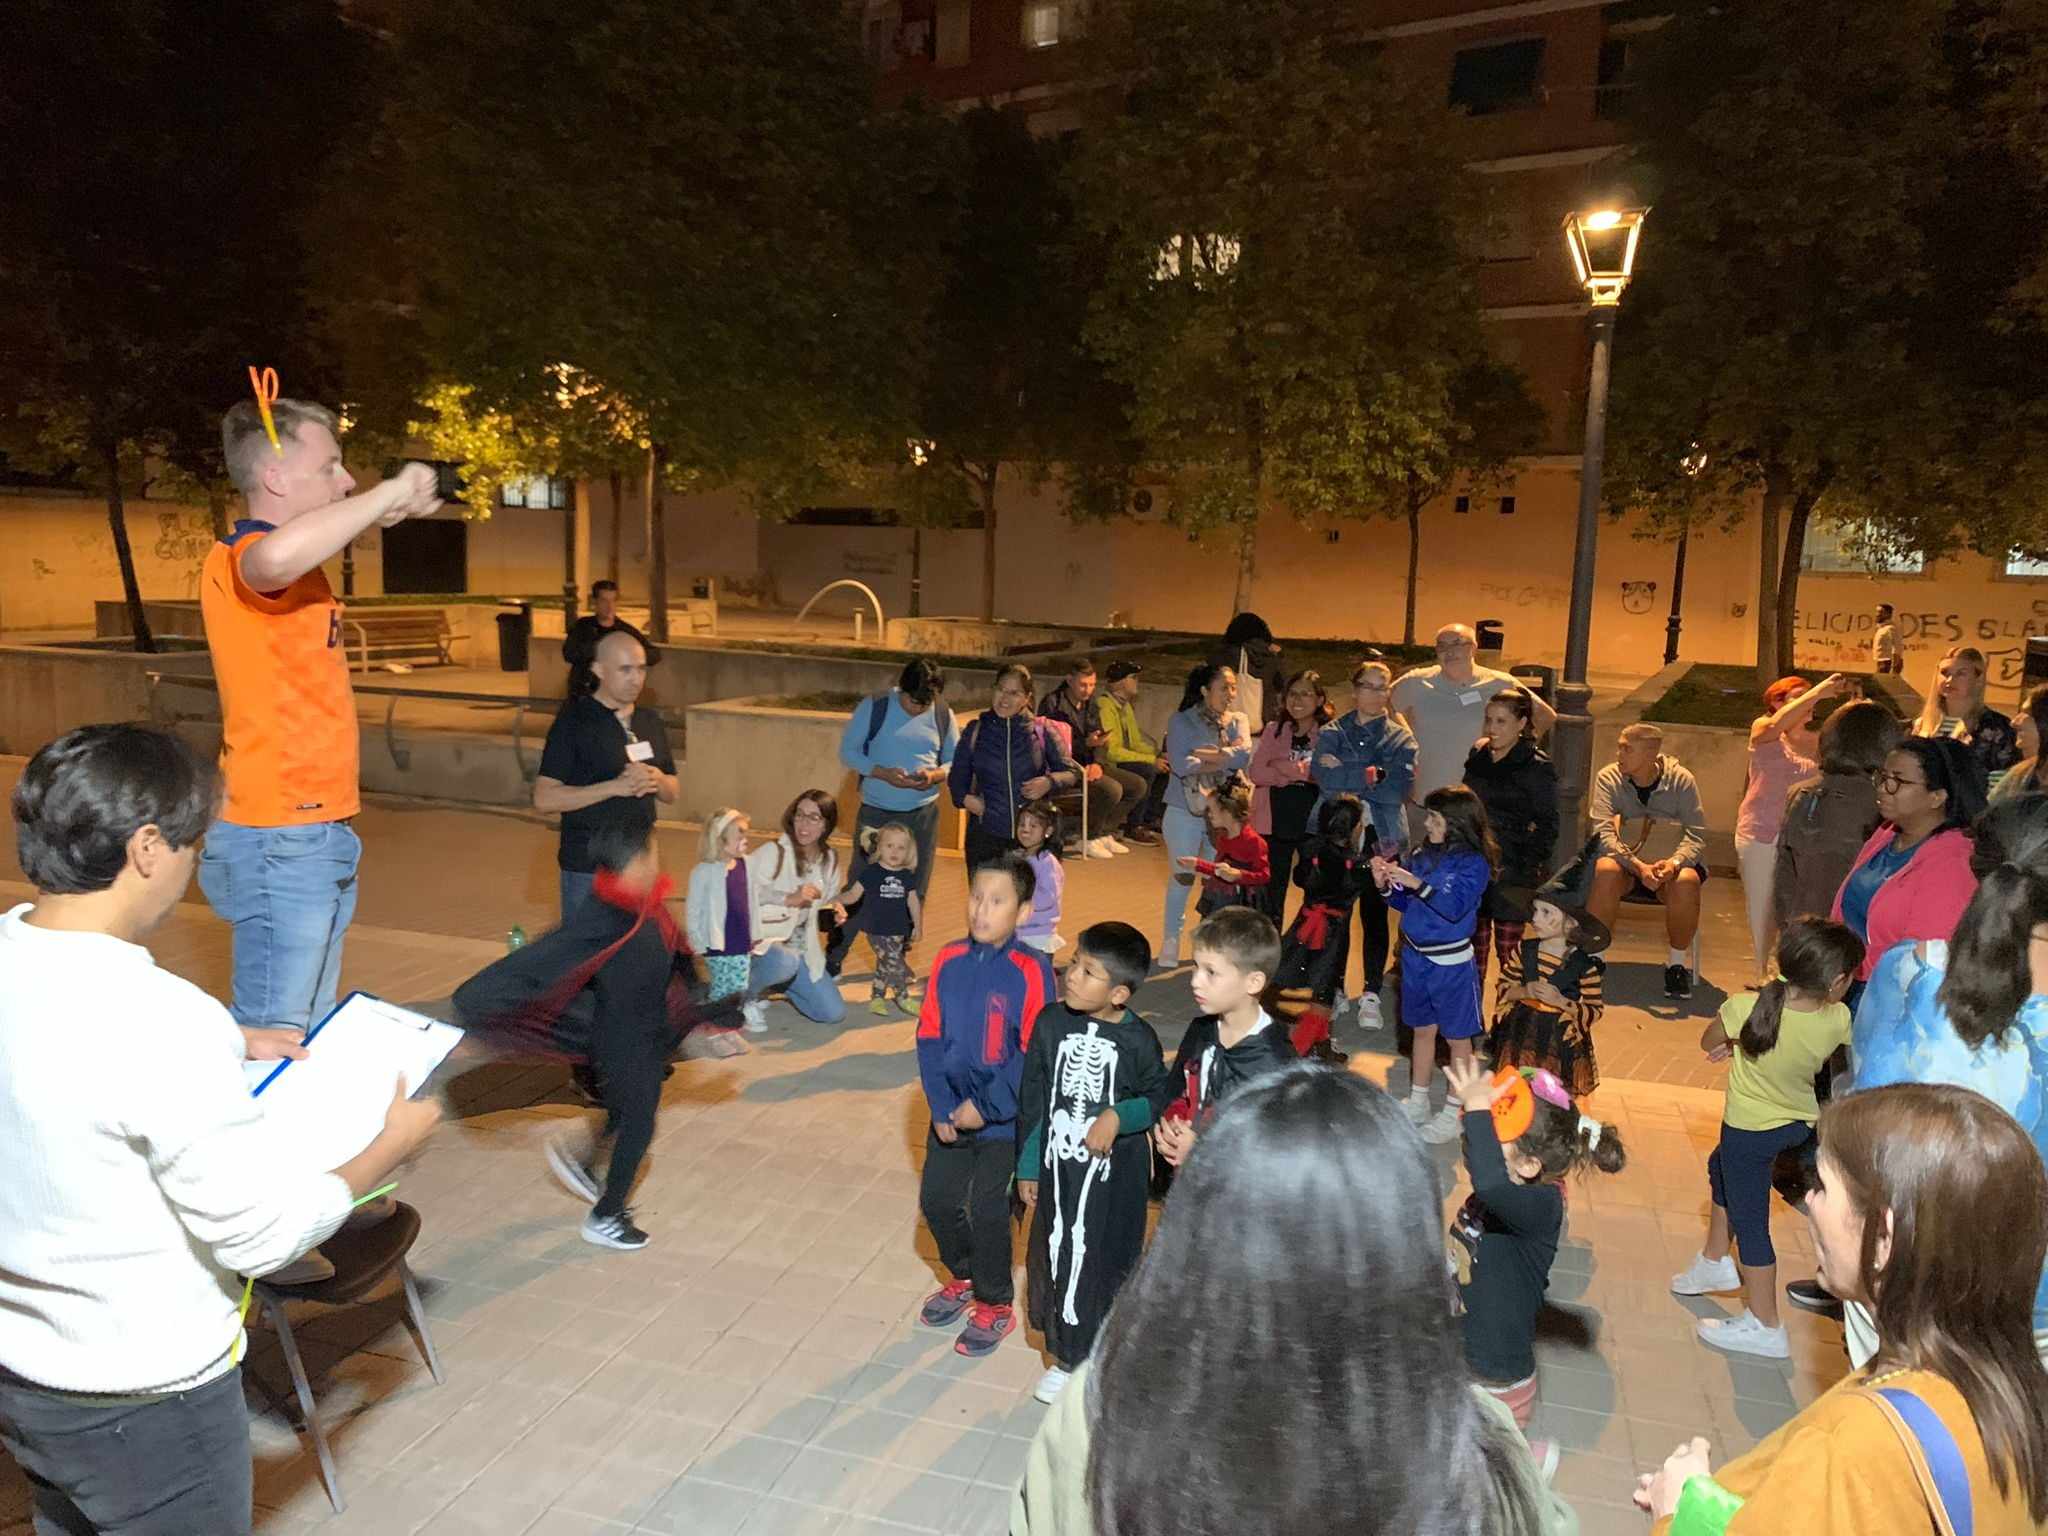 Outside games at 'Fiesta de la luz'